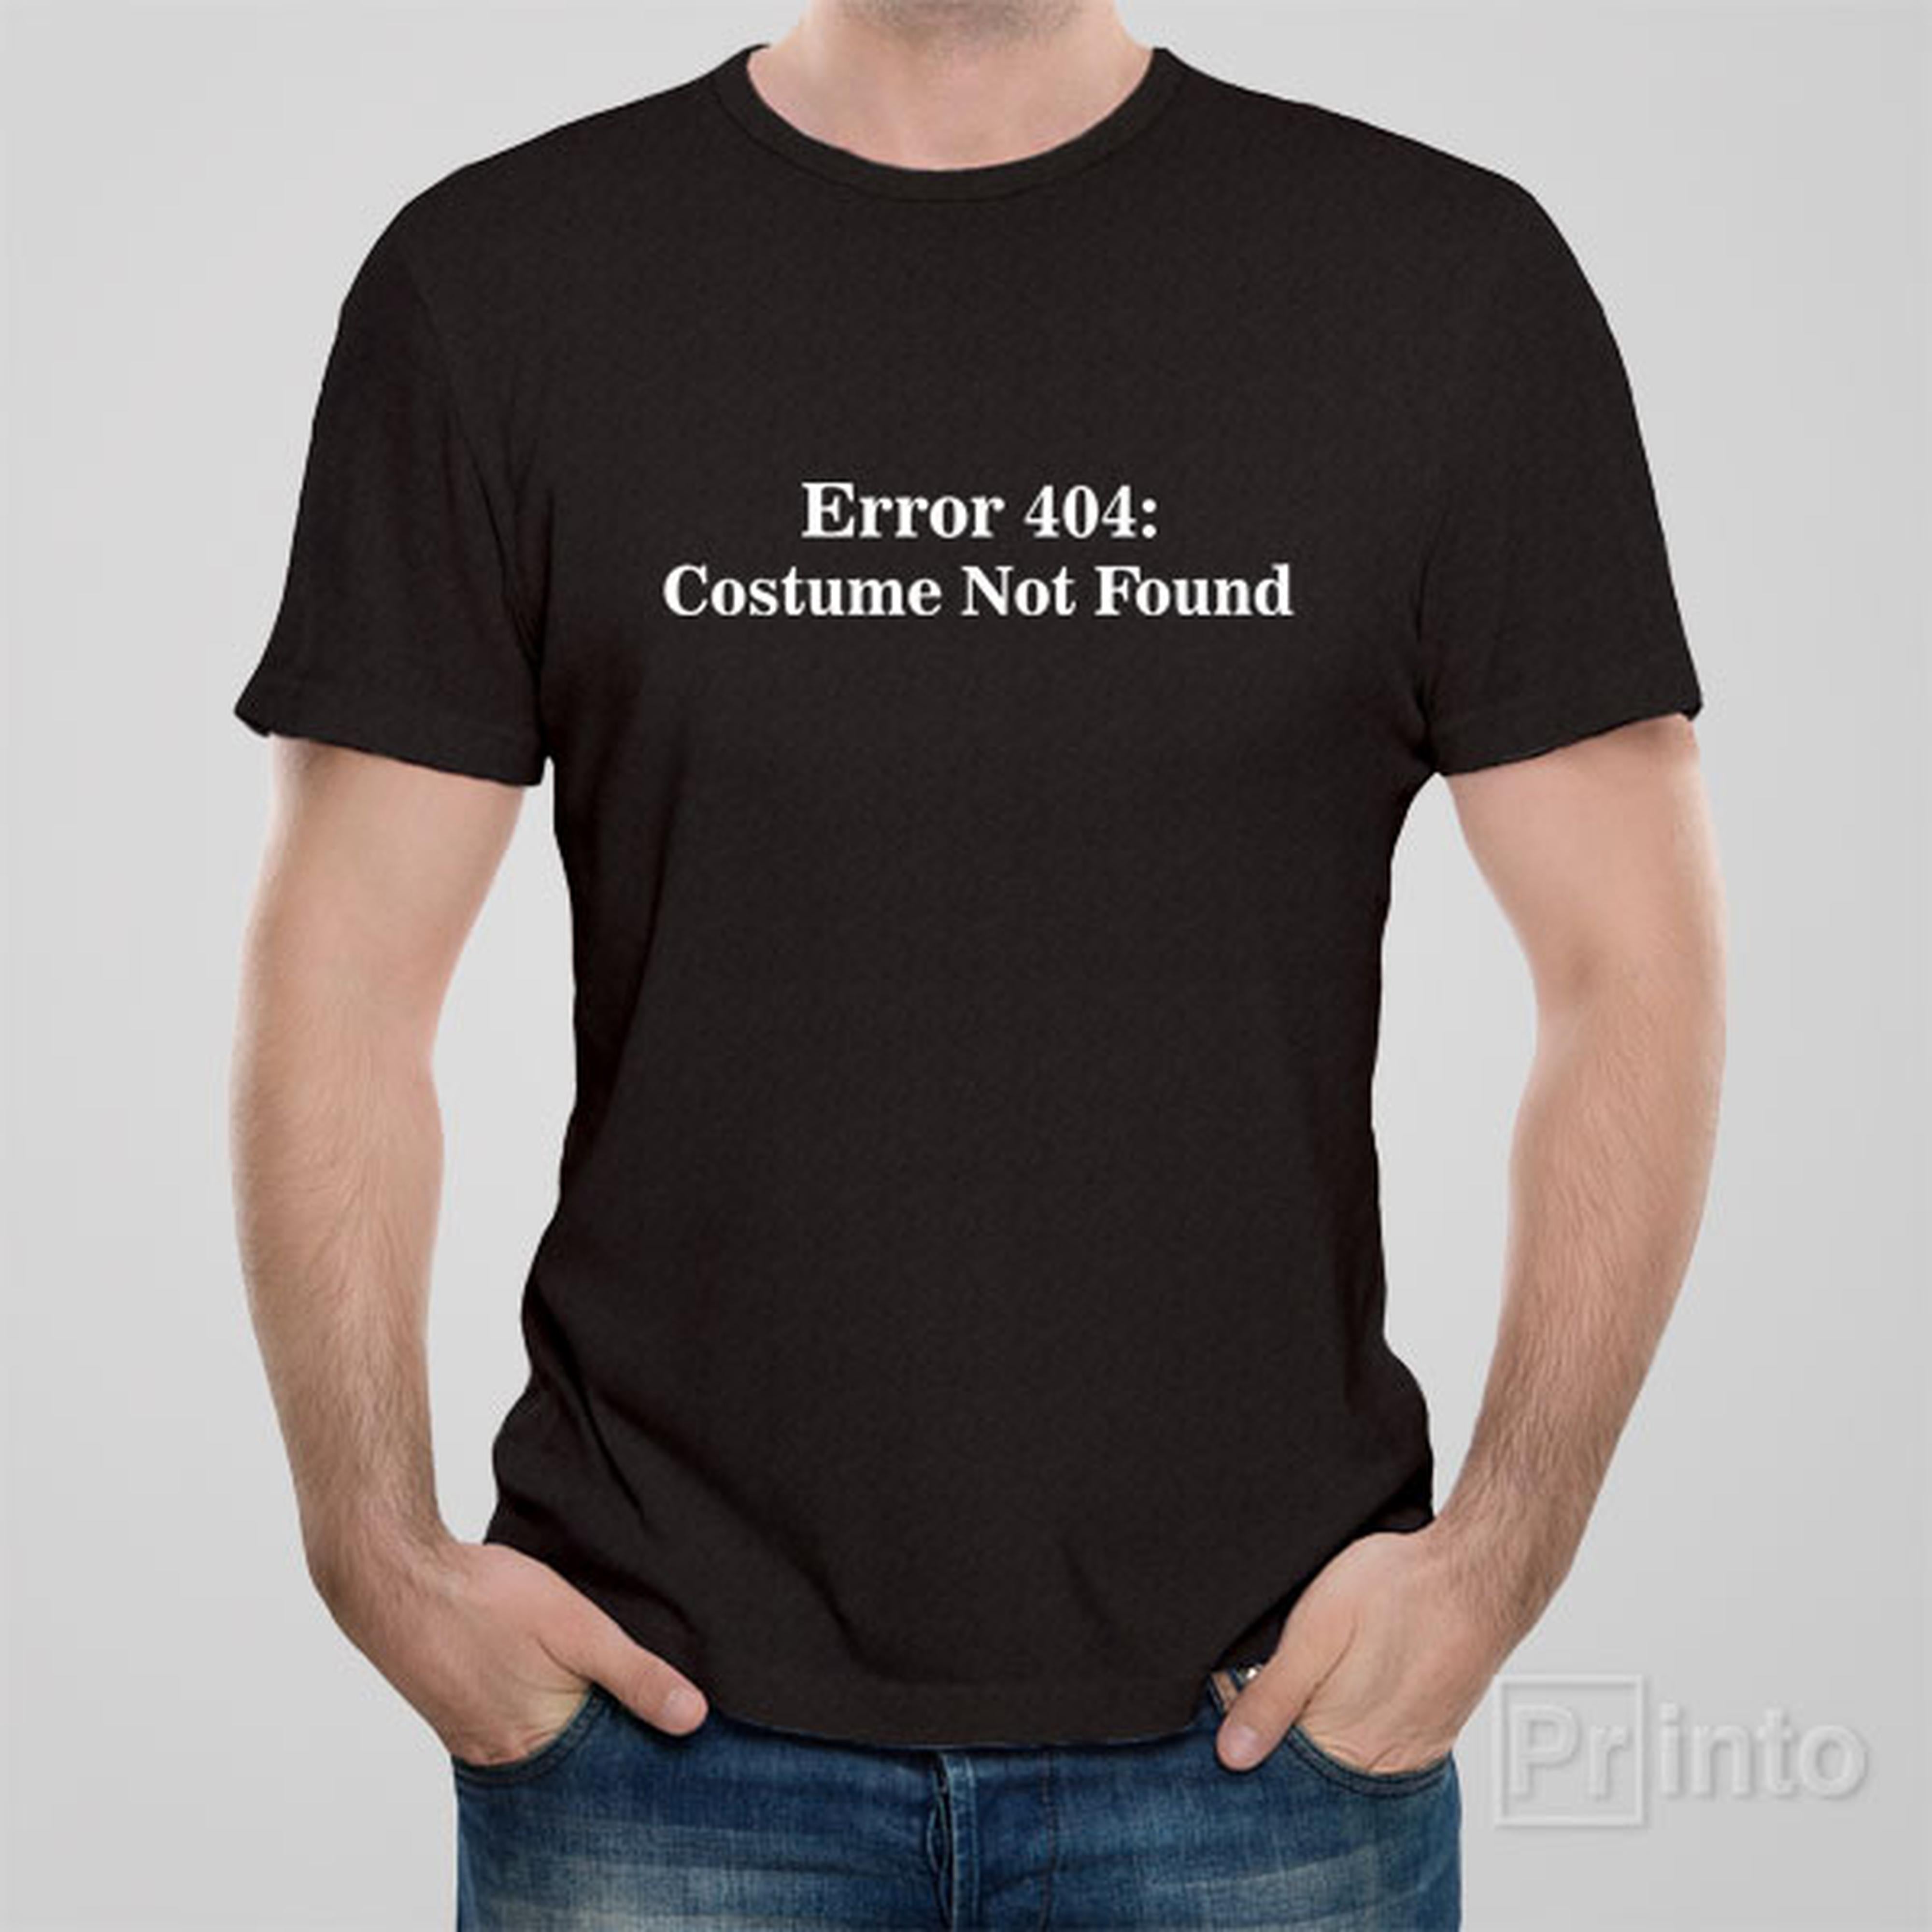 I blame Society футболка. Life pub футболка. T Shirt 404 Error. Dont found